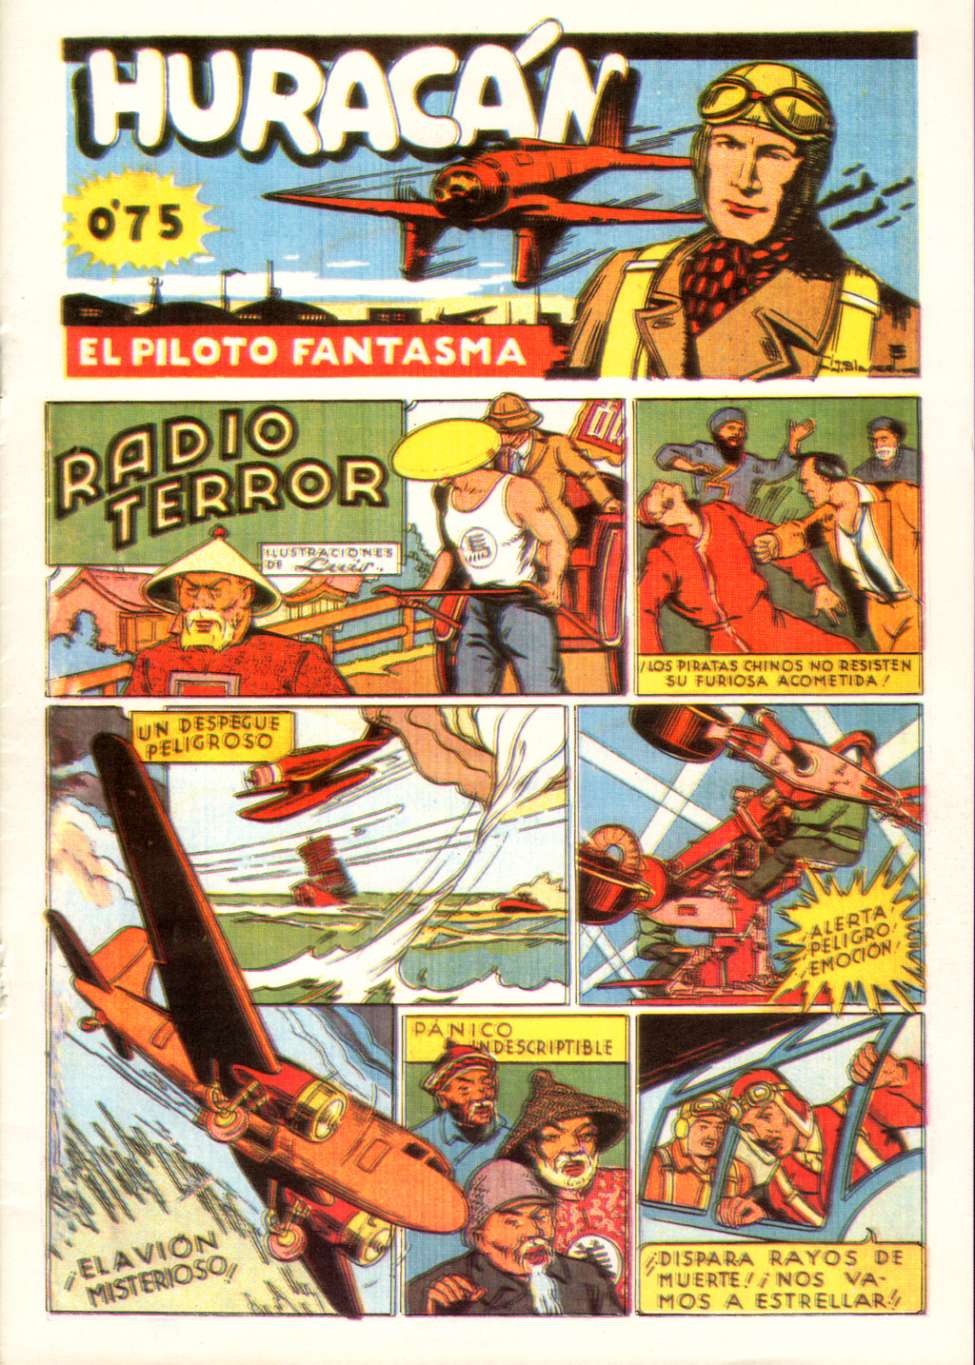 Book Cover For Huracan El Piloto Fantasma 2 - Radio Terror